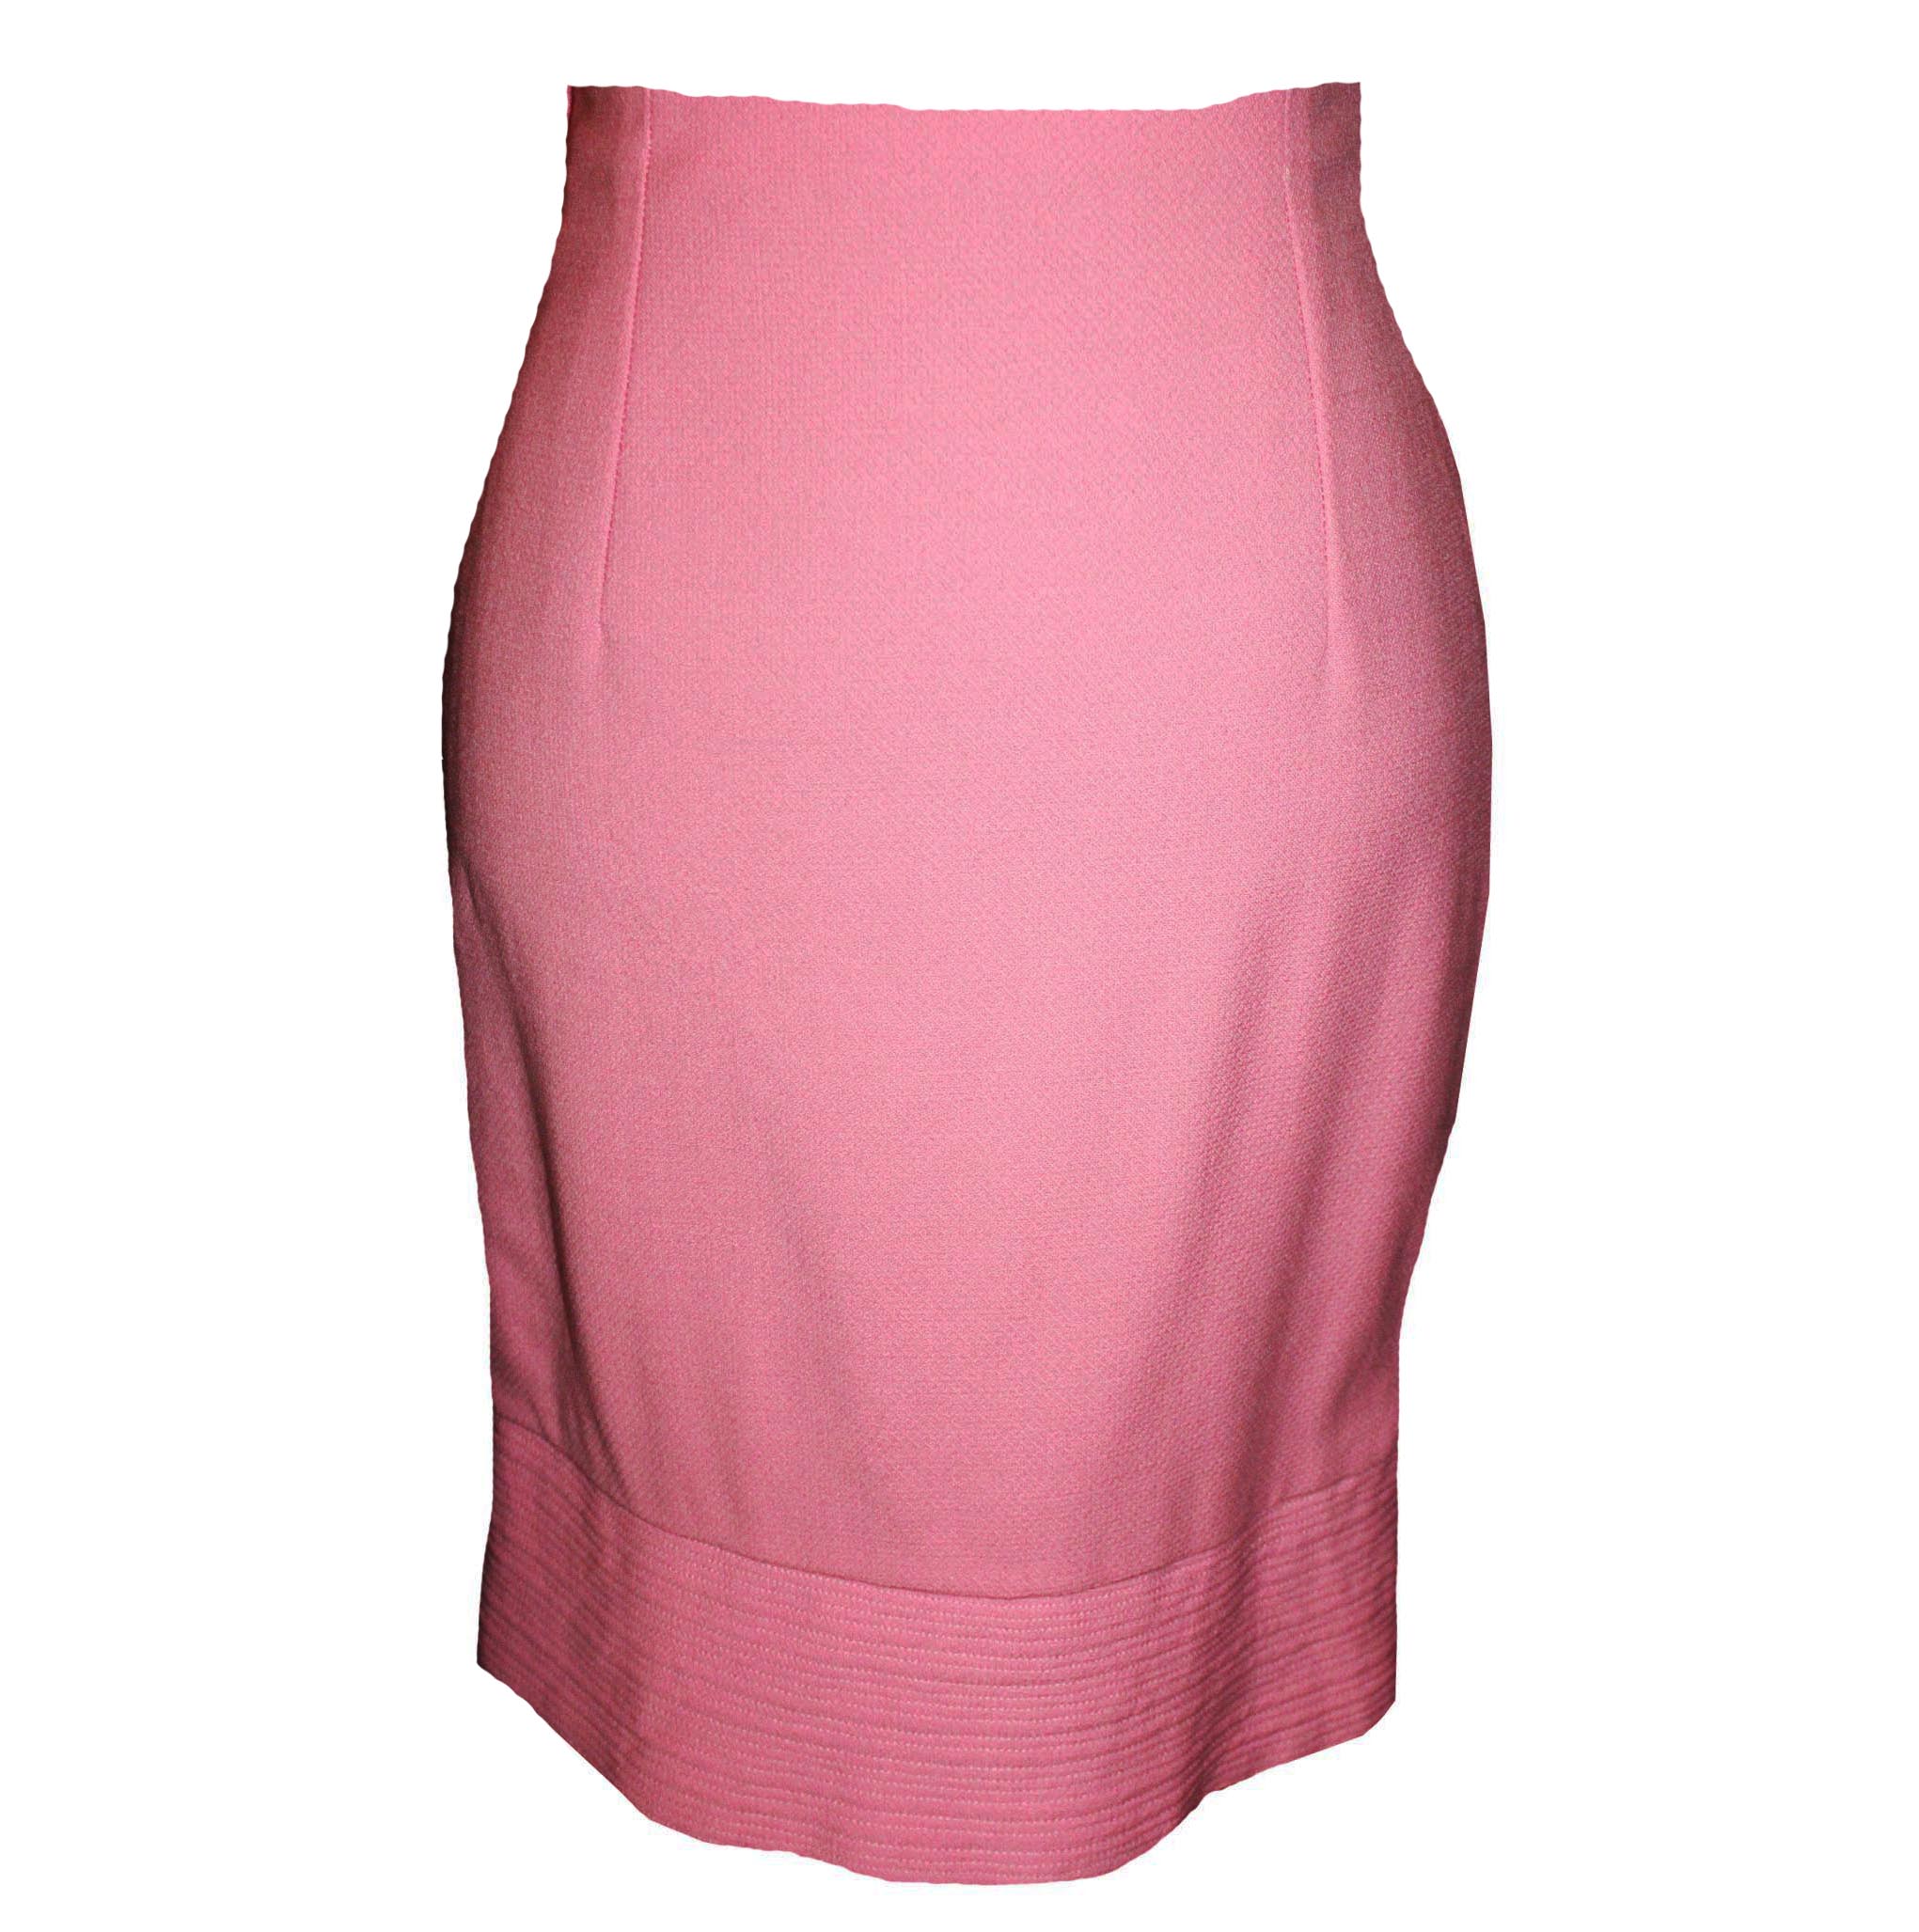 Pink Versace Skirt | Pelicans and Parrots Shop